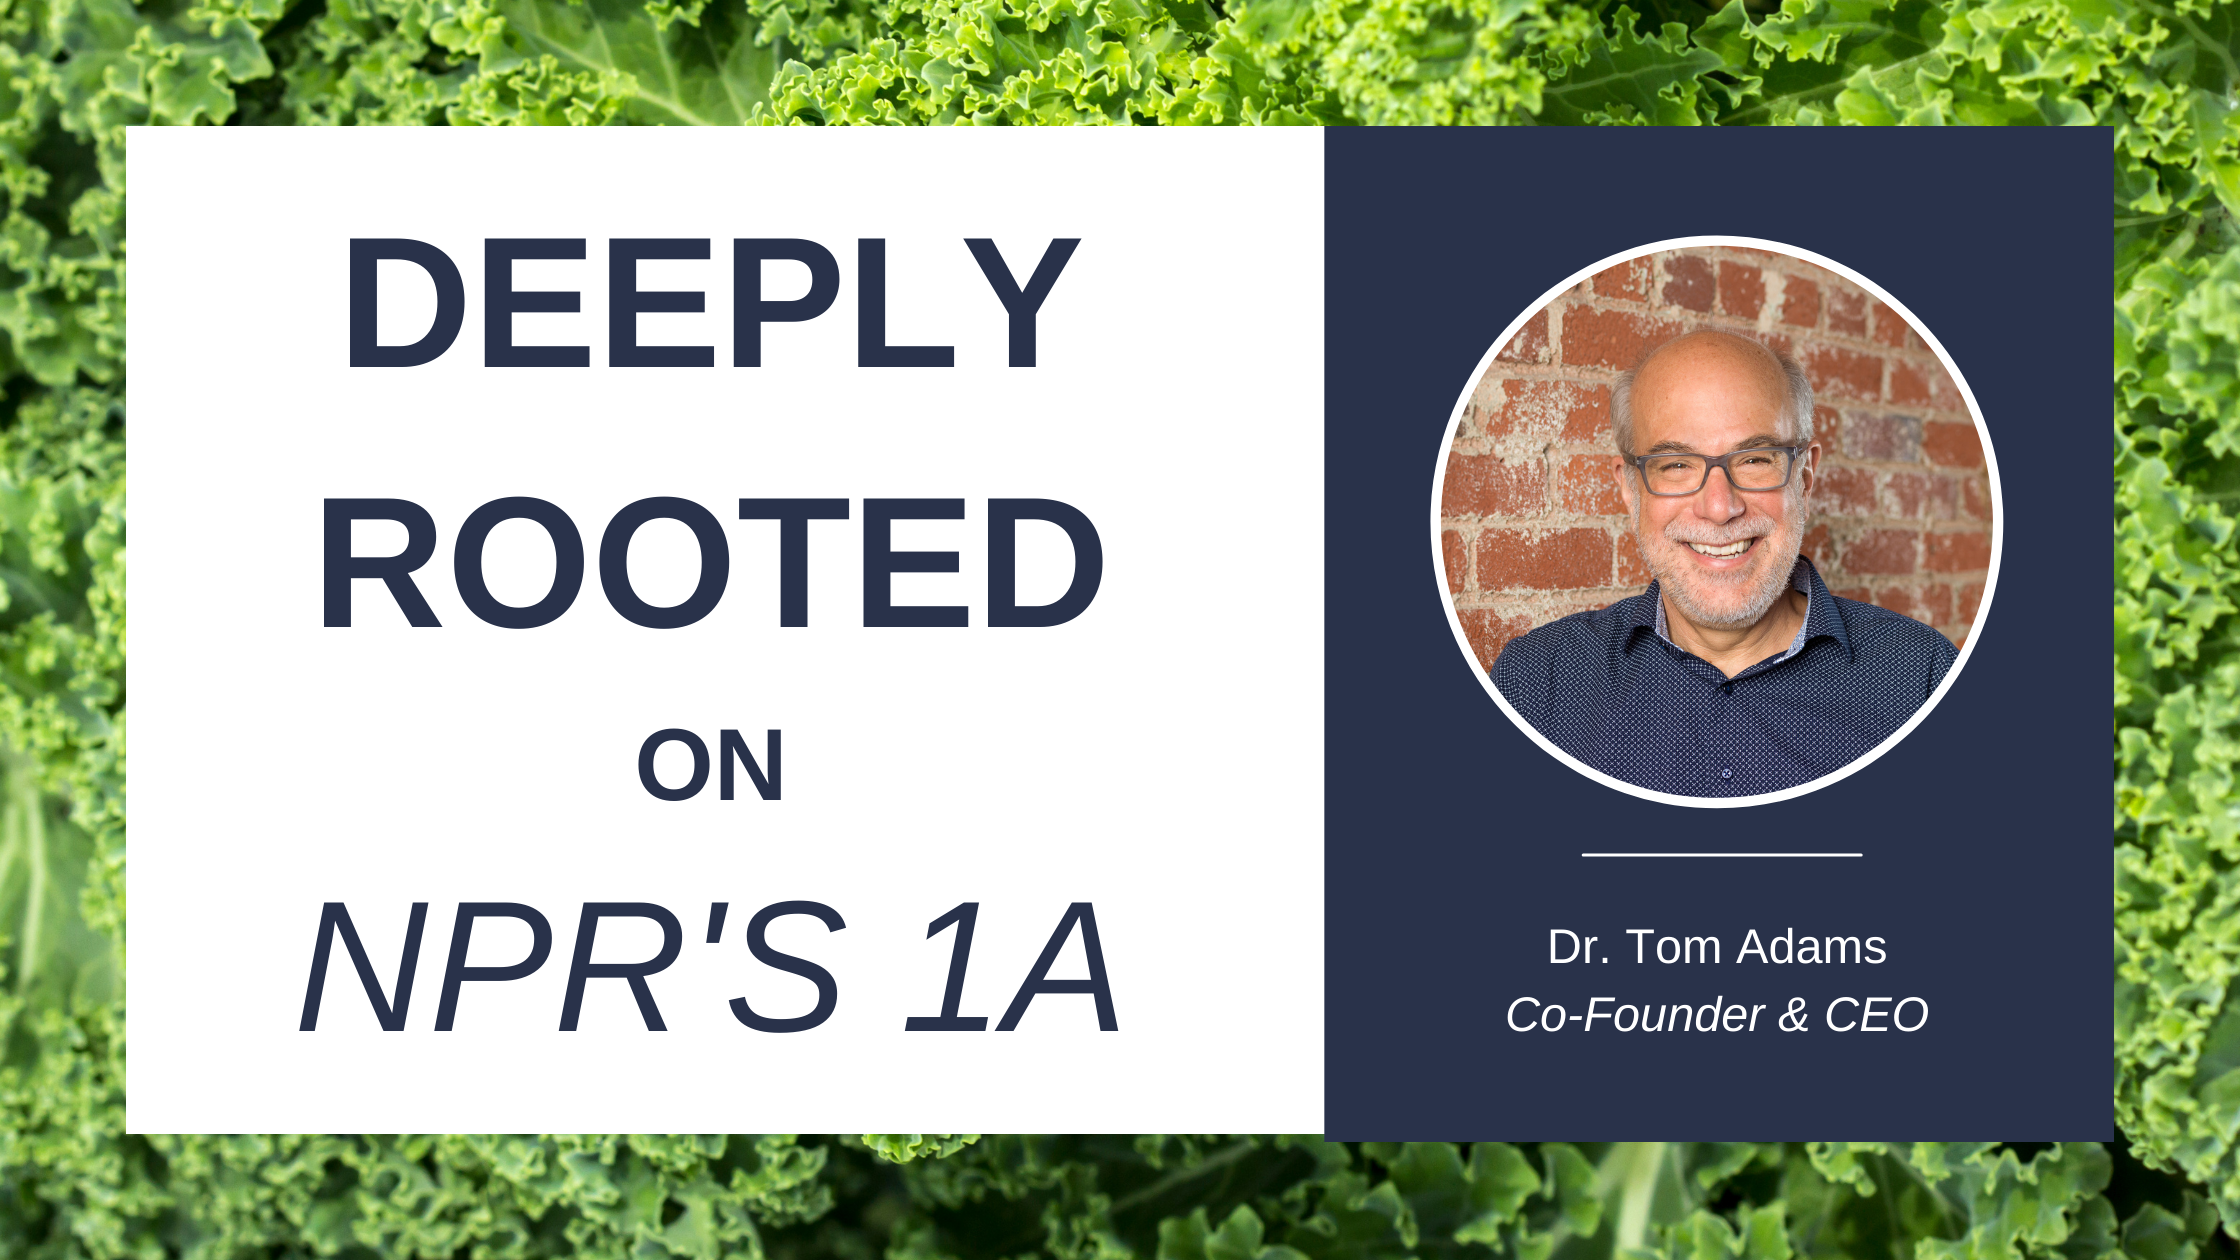 Dr. Tom Adams Discusses CRISPR on NPR's 1A Show